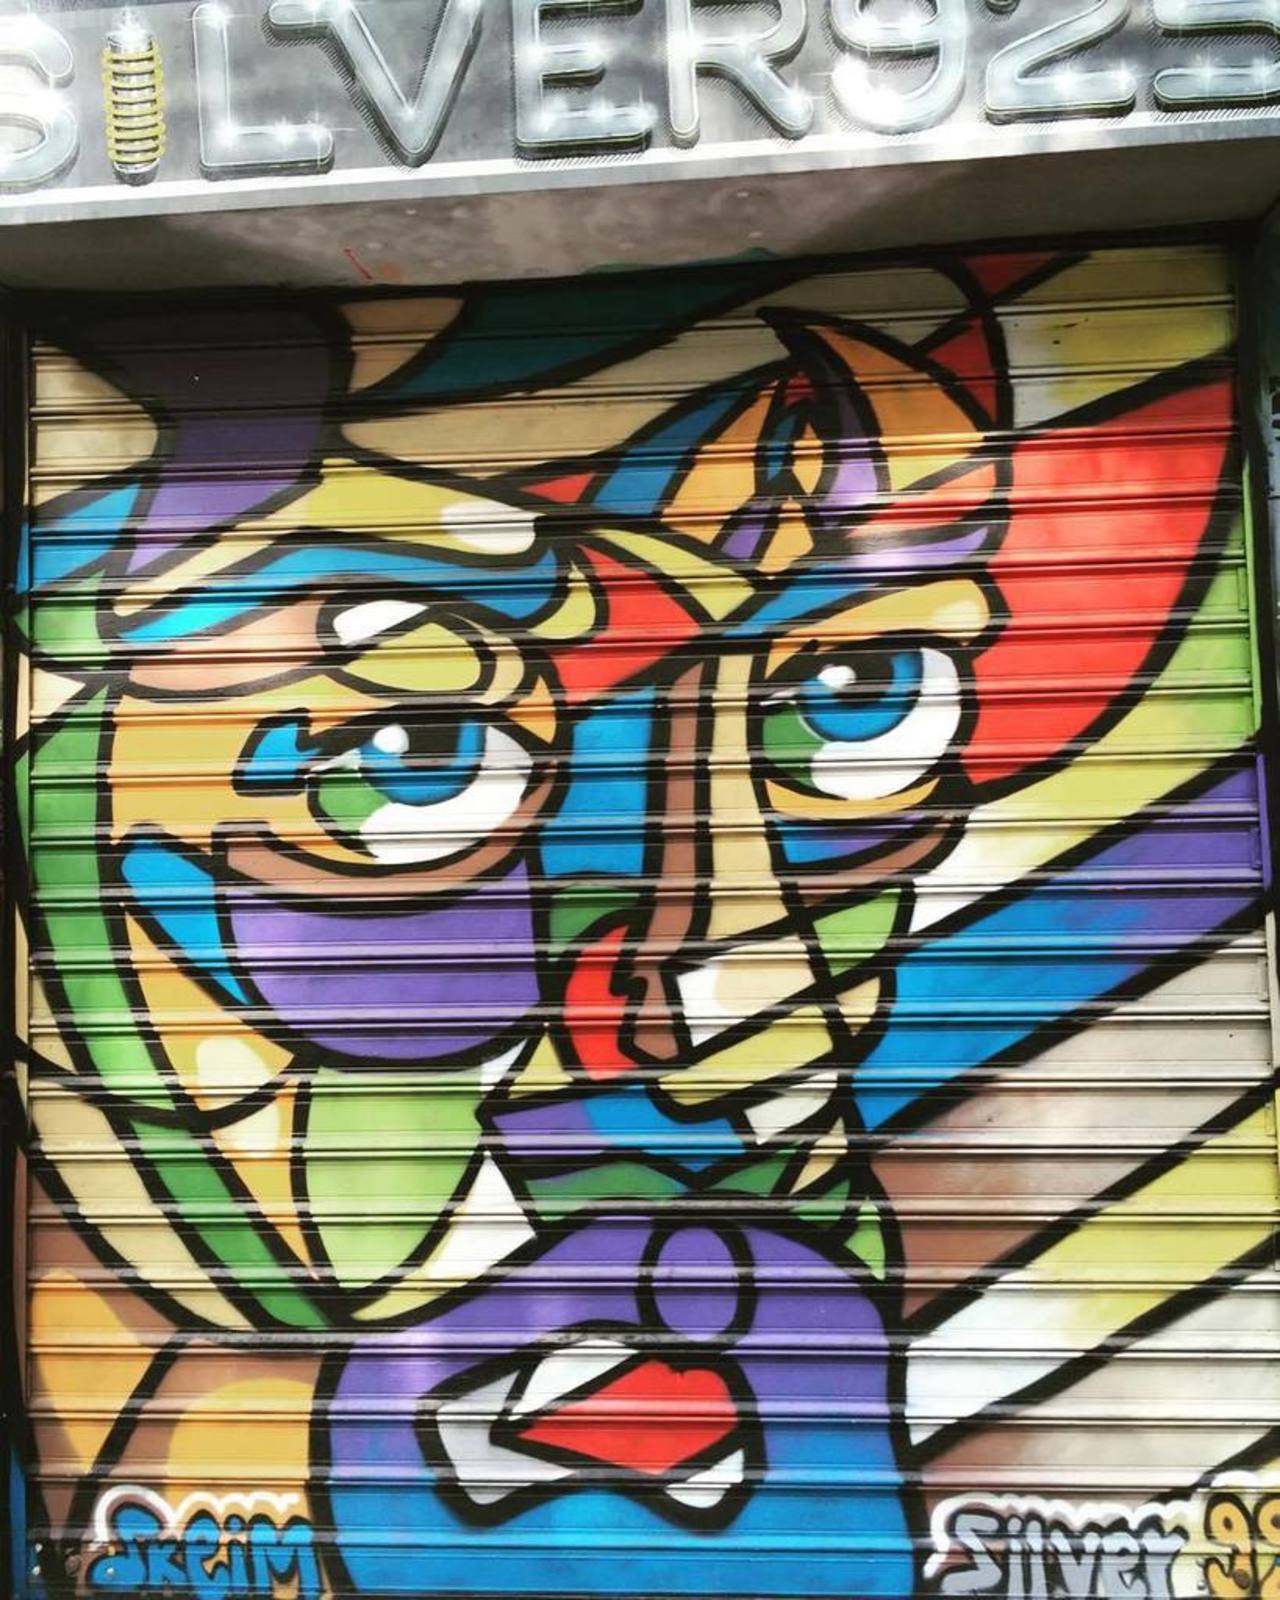 #Greece #athens #travel #street #streetart #graffiti #colors #man #explore #walkingaround … http://ift.tt/1LGlWJB http://t.co/3uoV51CBFY